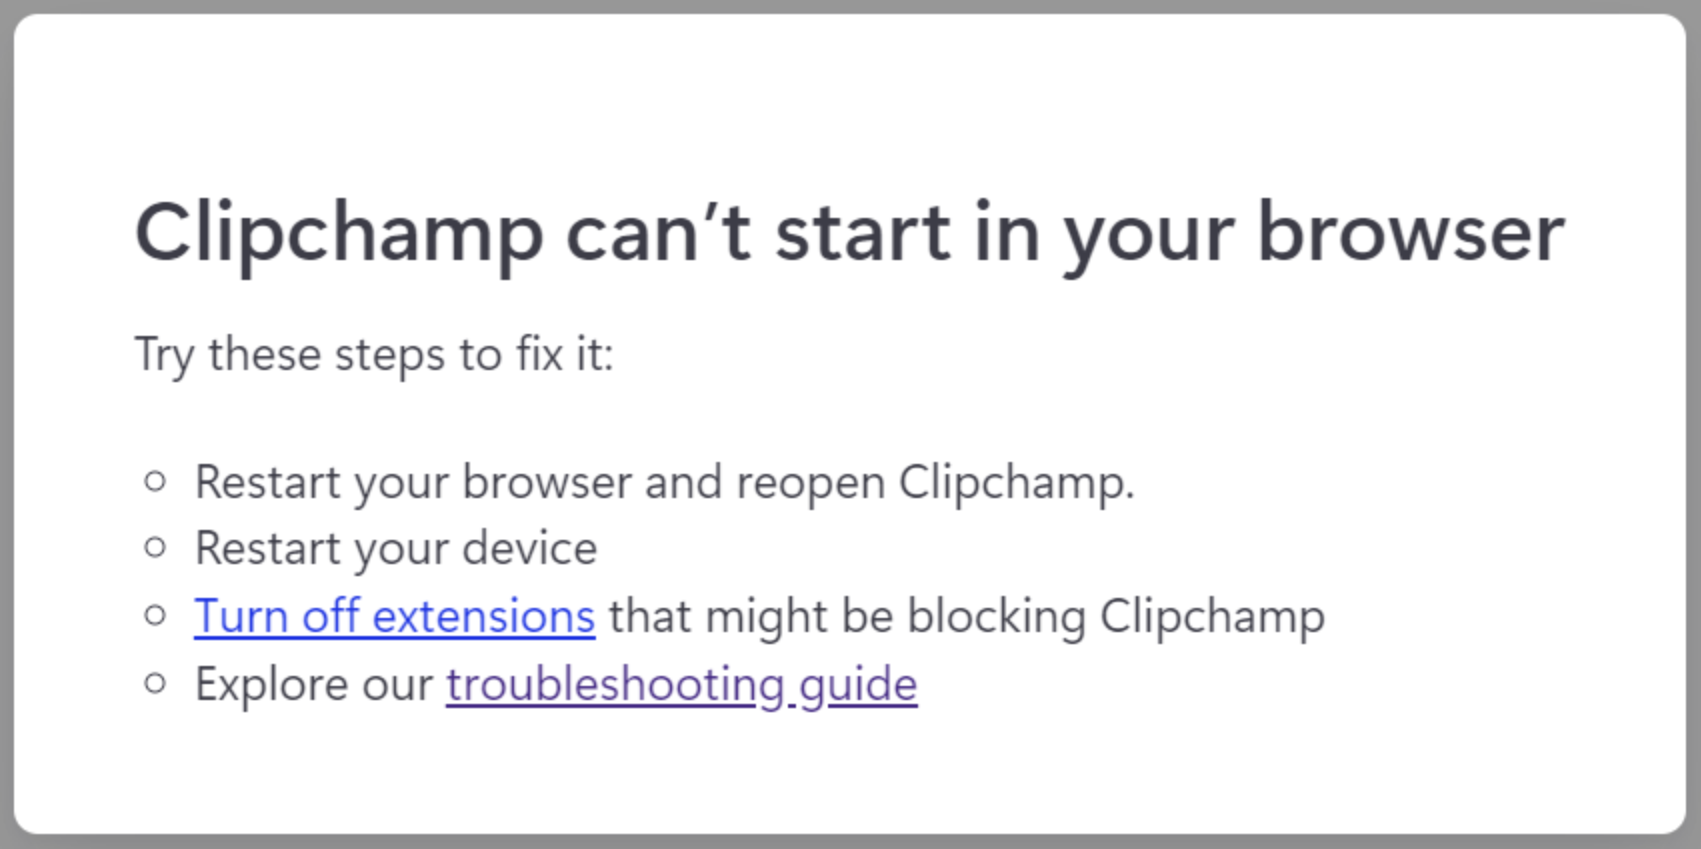 Clipchamp error message - hardware unsupported